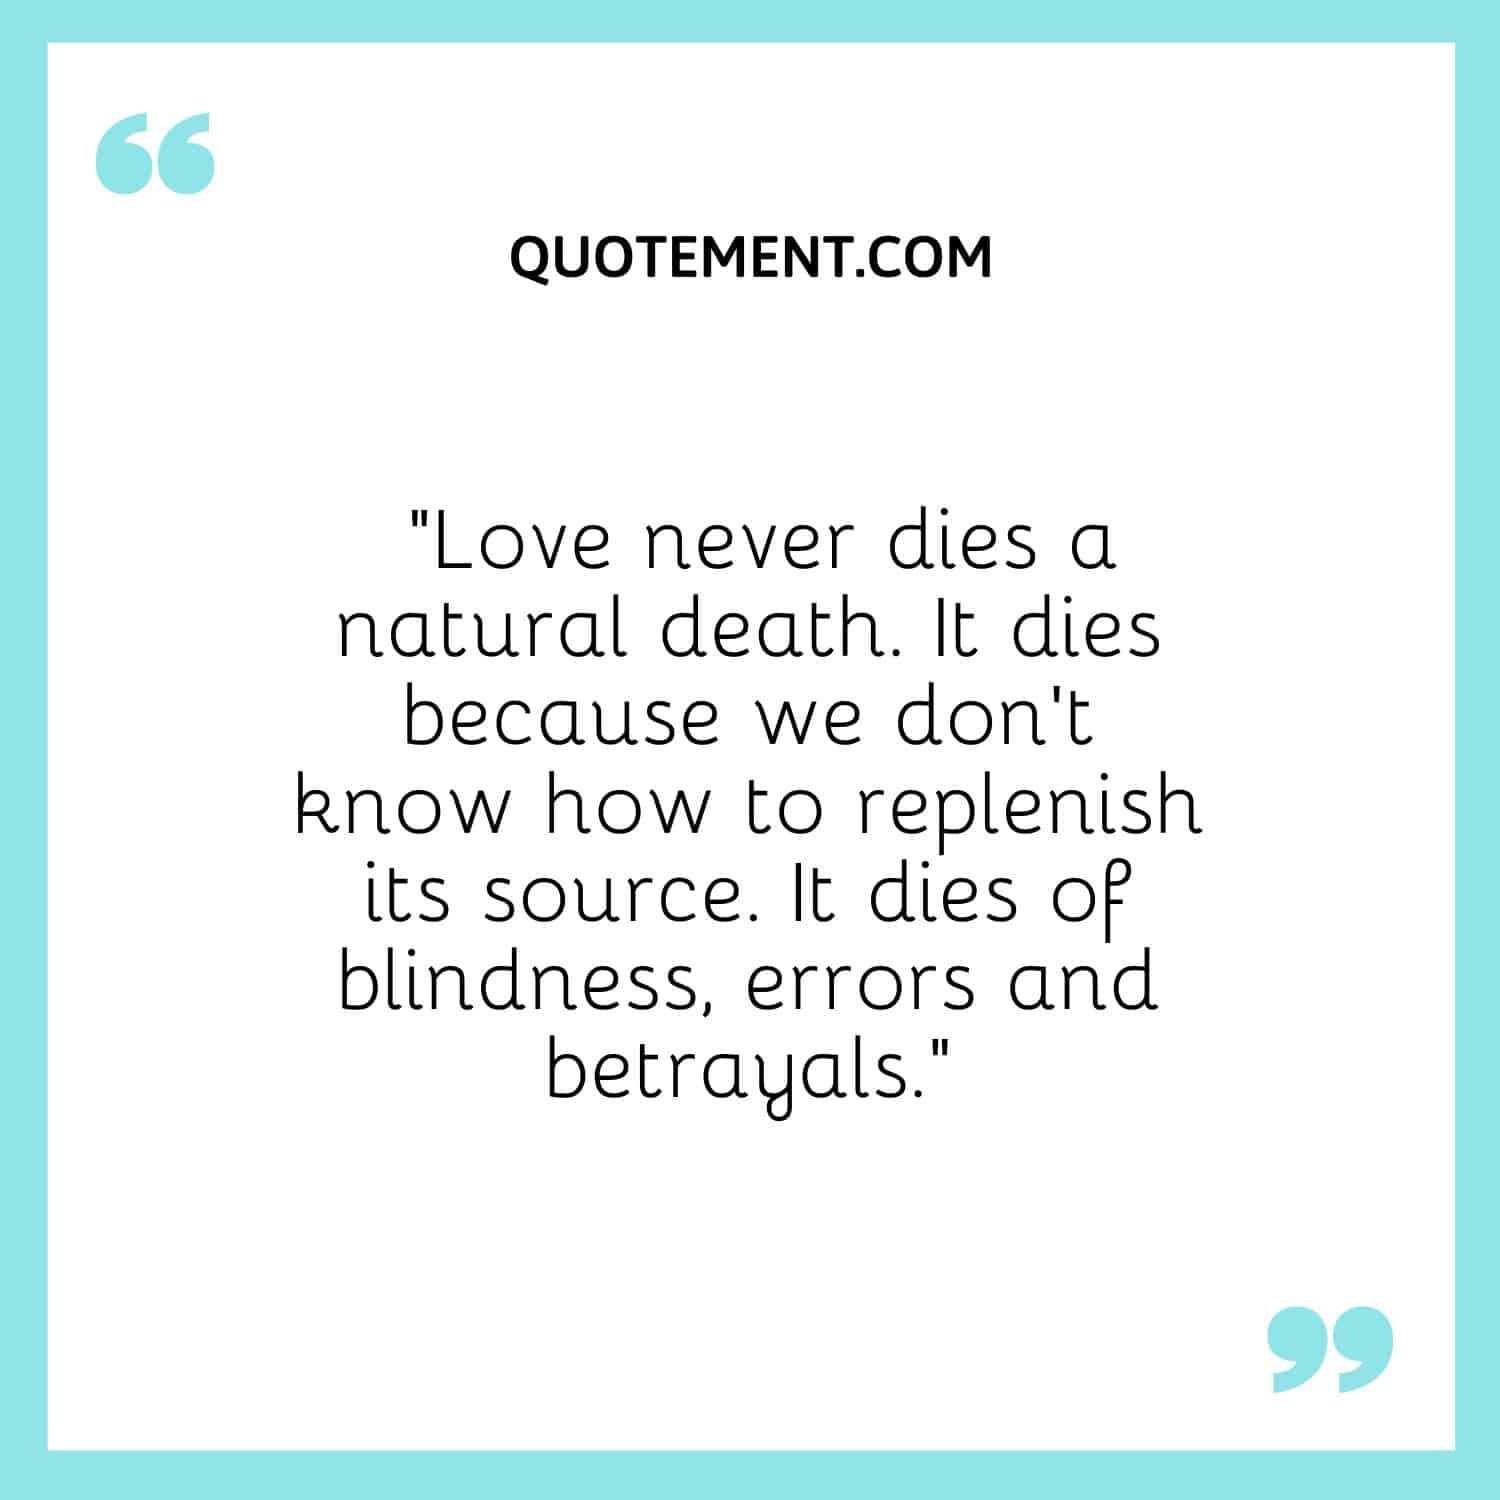 Love never dies a natural death